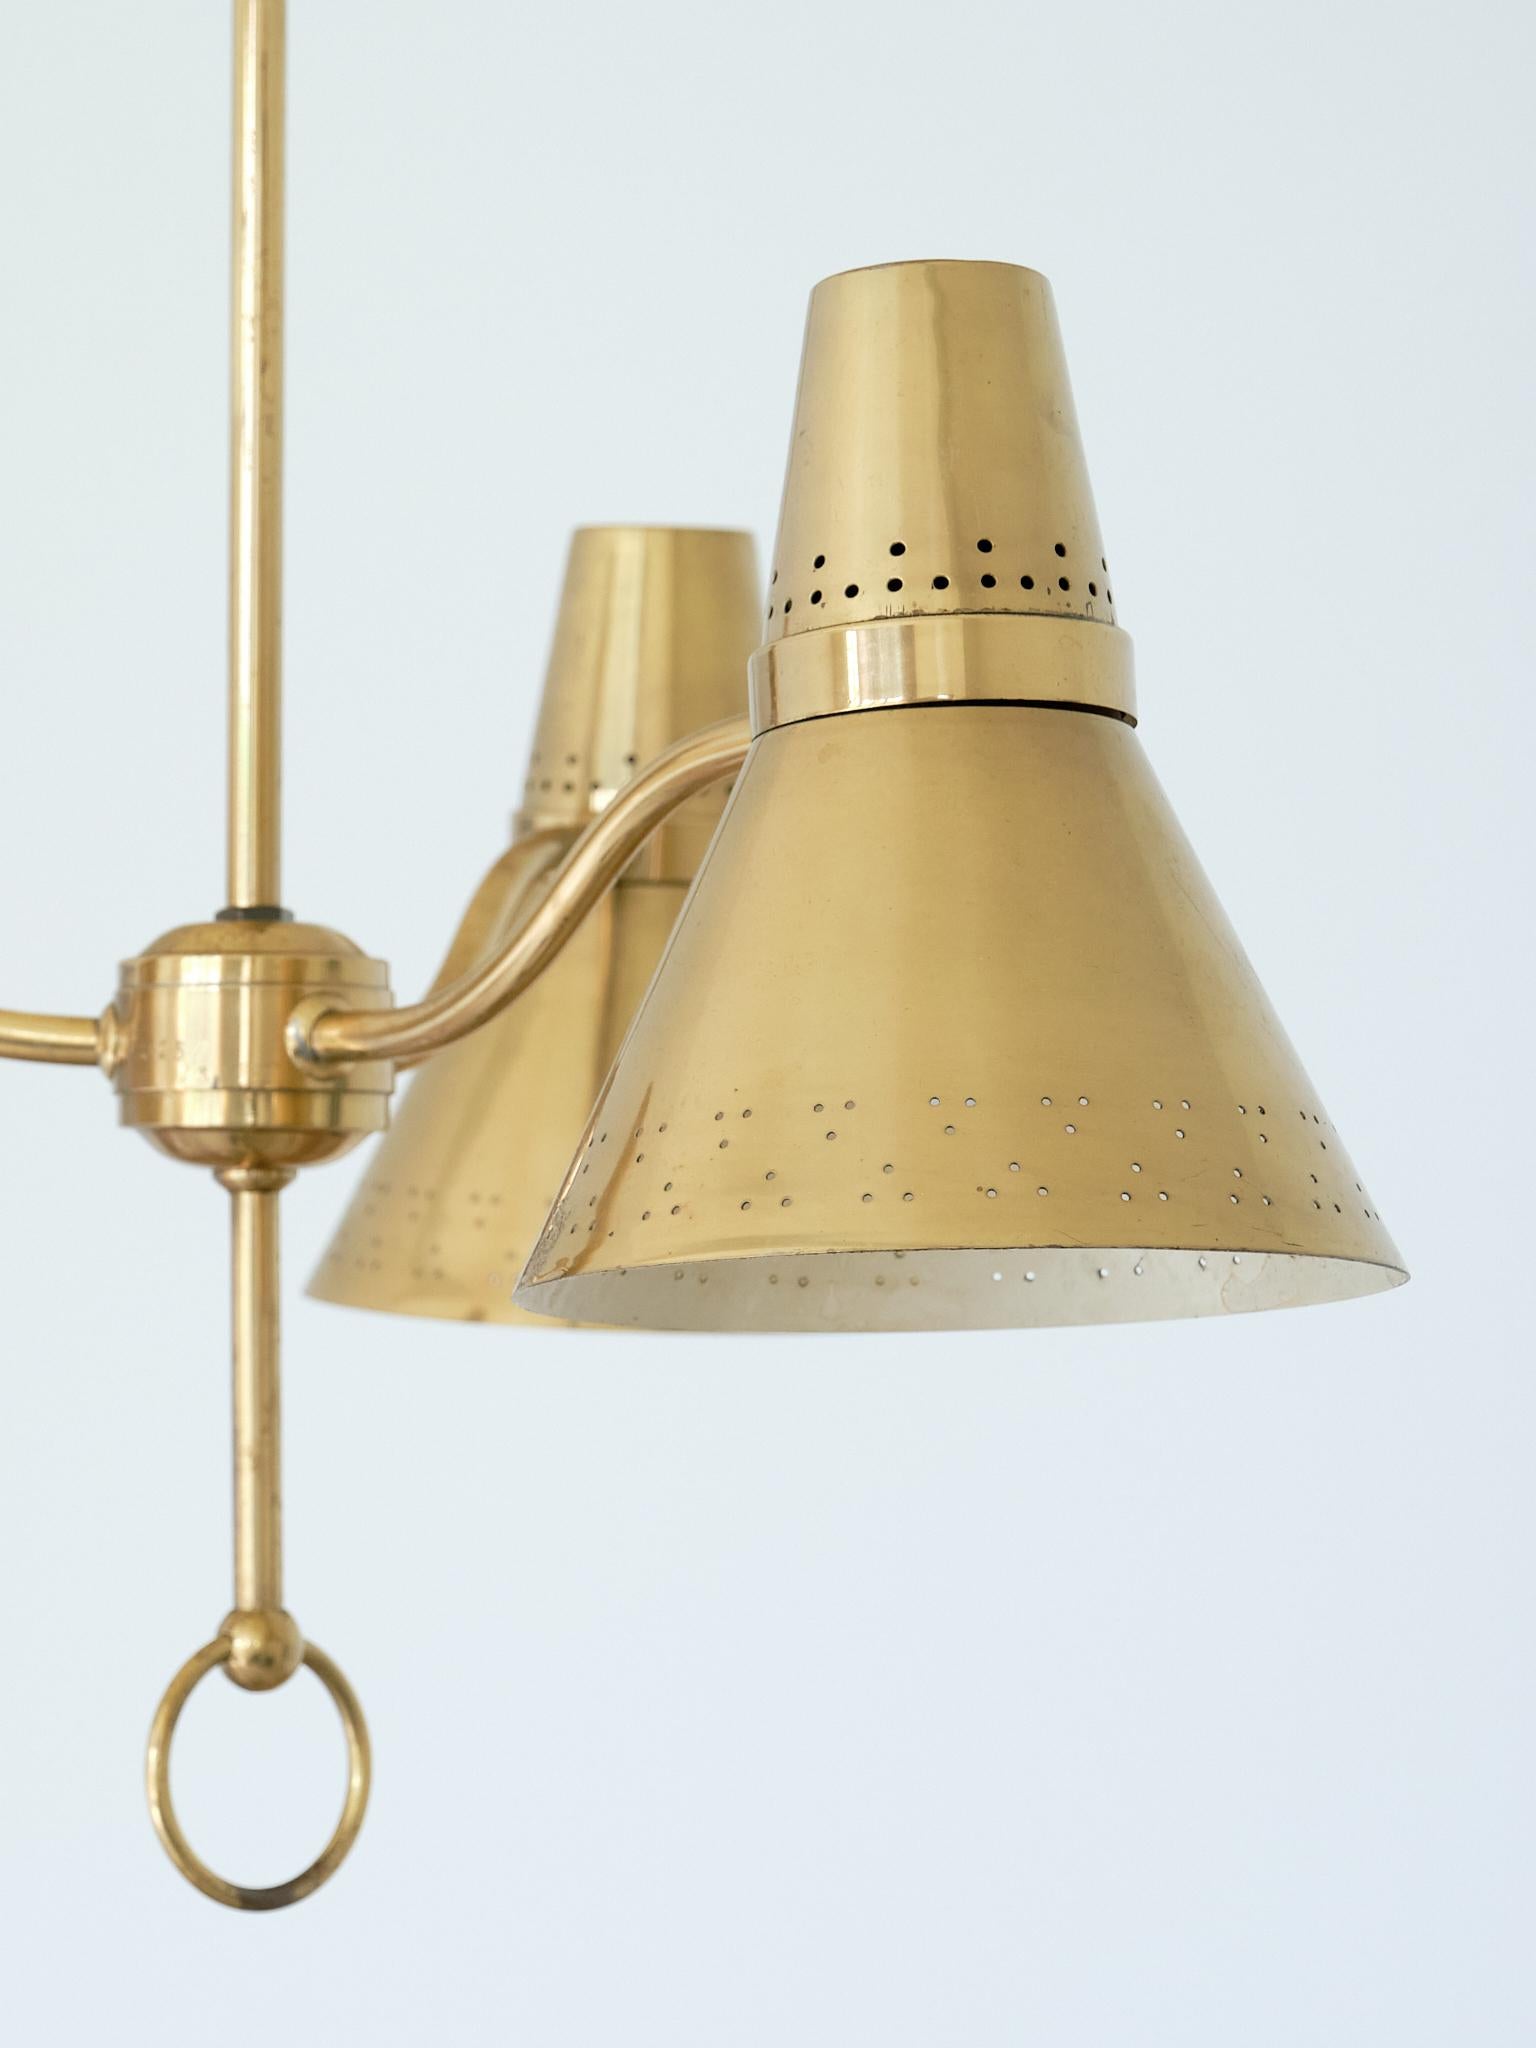 AB. E. Hansson Height Adjustable Three Arm Pendant Light in Brass, Sweden, 1950s 3